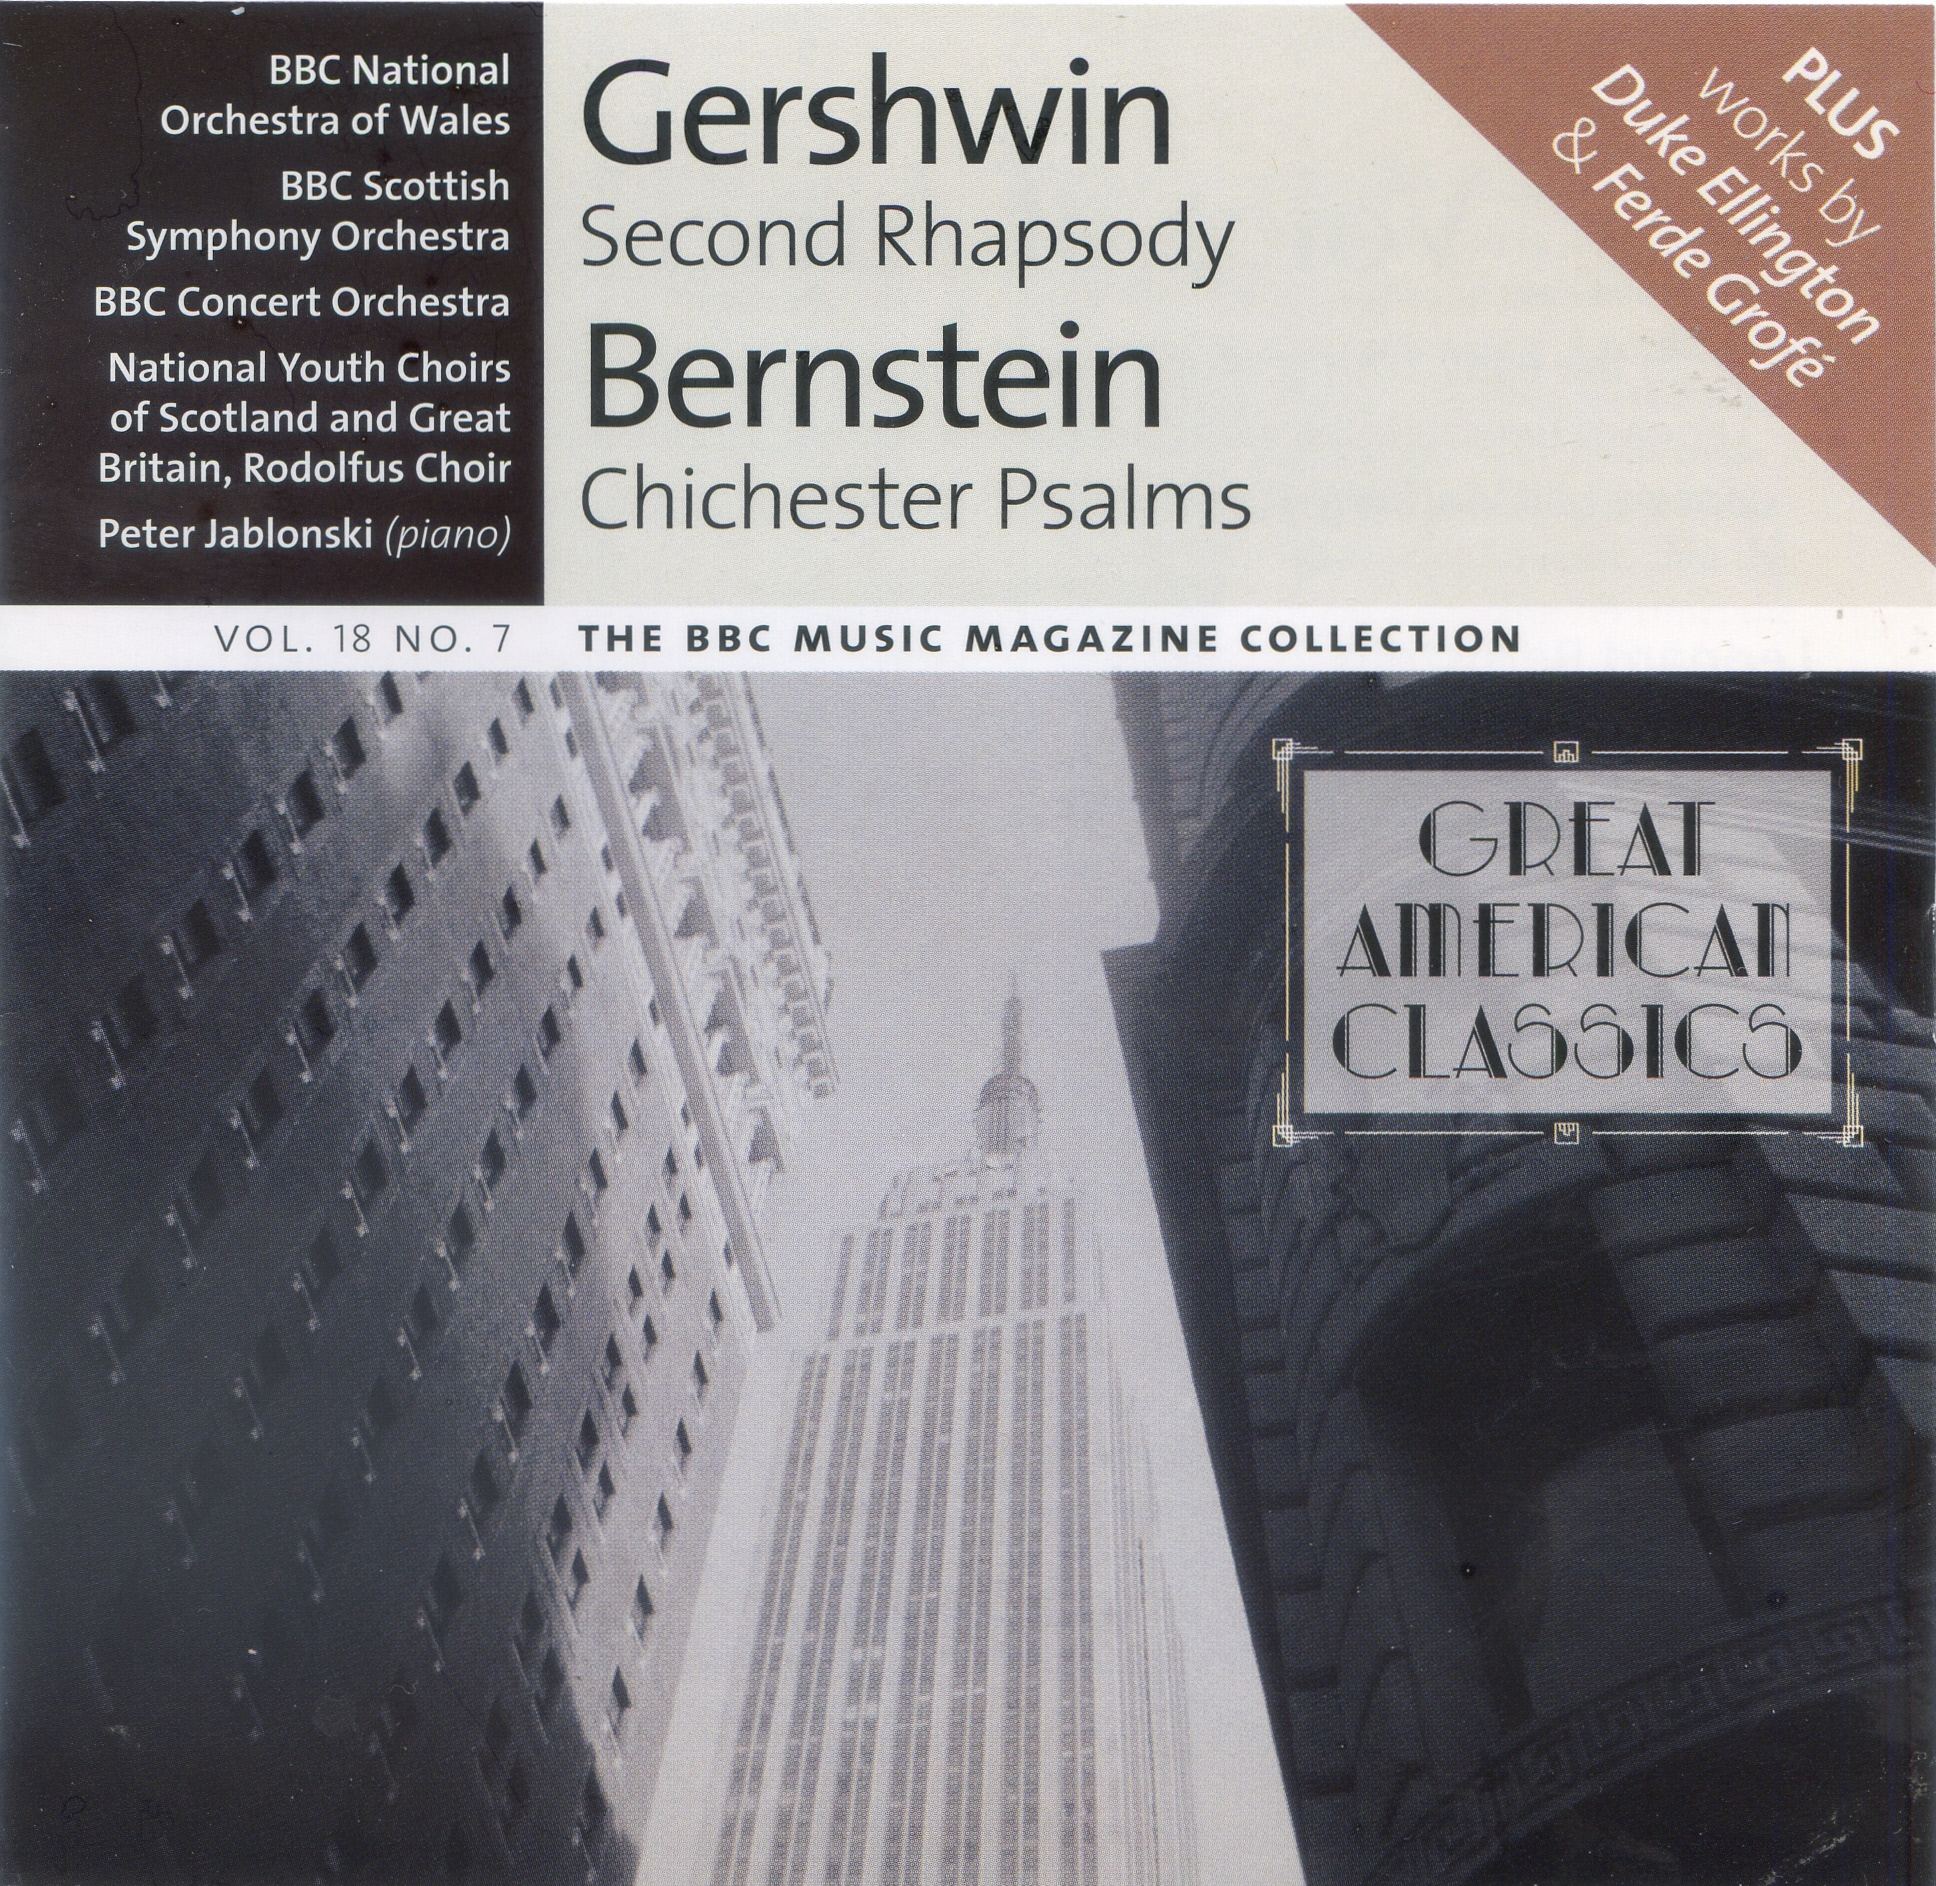 Gershwin Bernstein Great American Classics